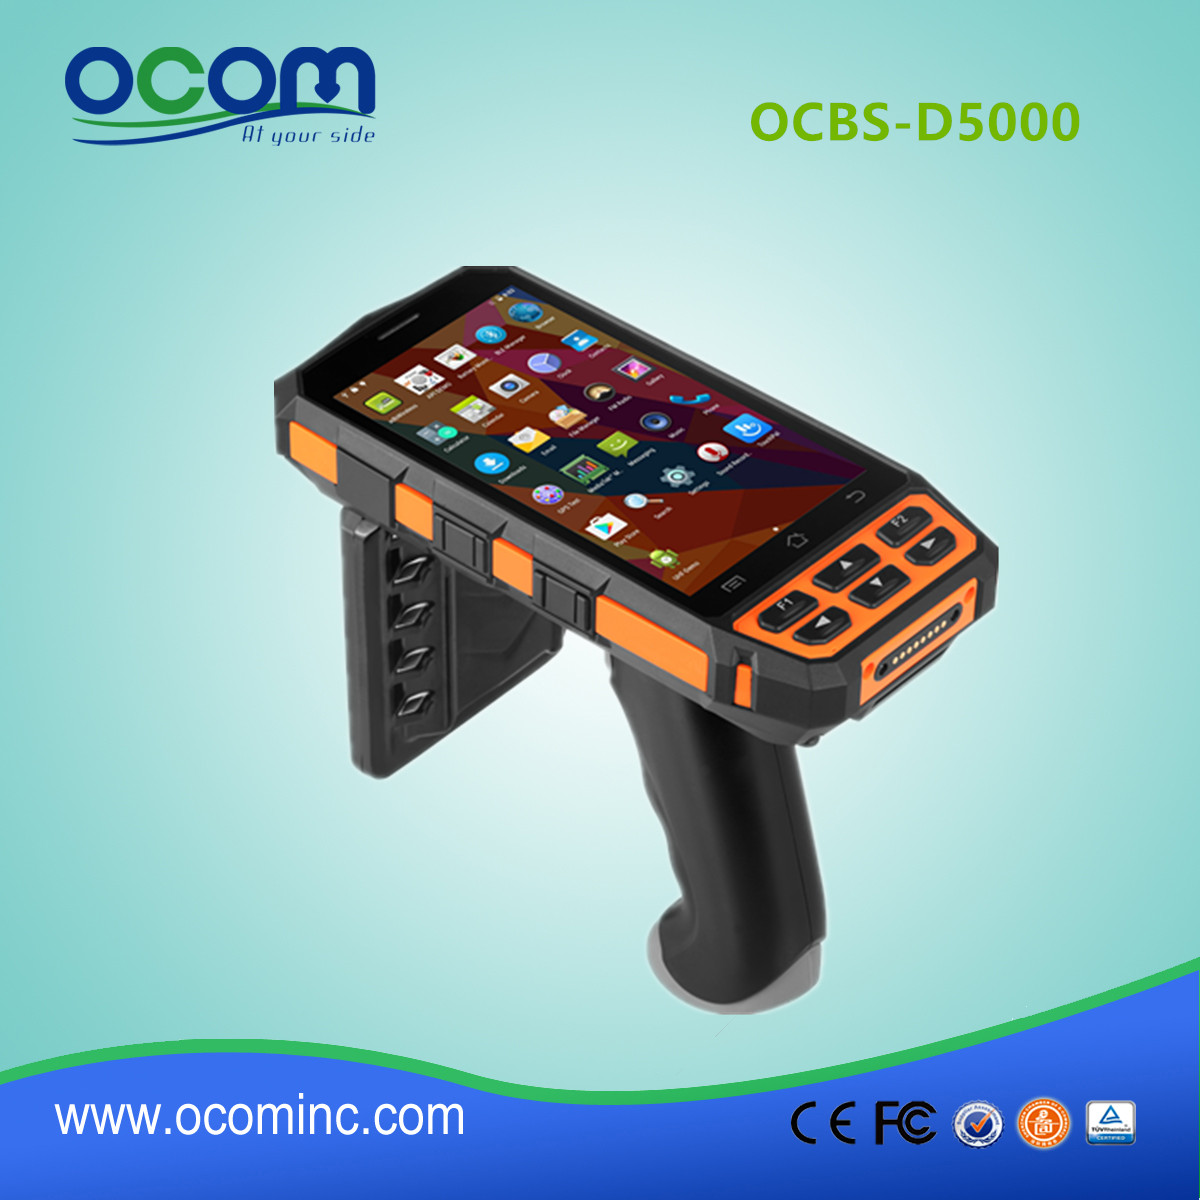 OCBS-D5000 Handheld android draagbare mobiele dataverzamelaarsterminal